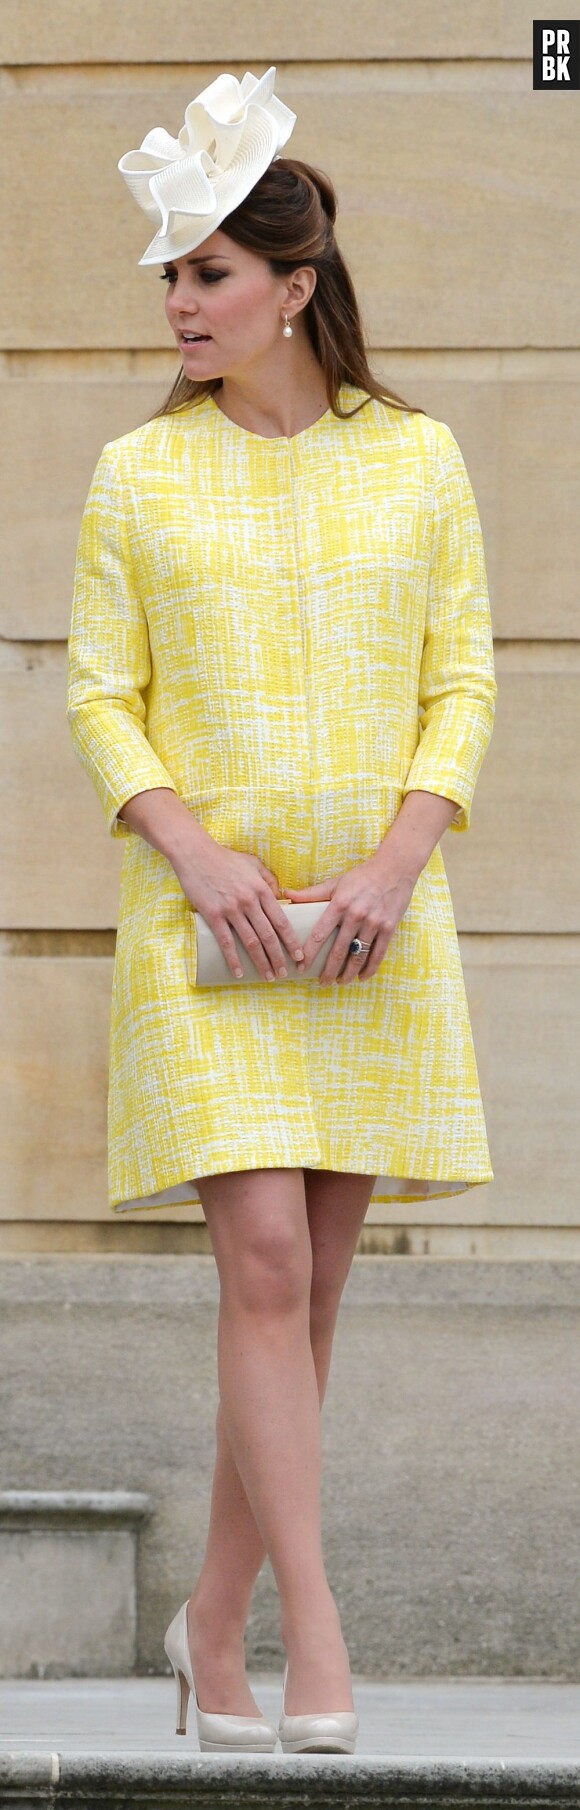 Kate Middleton, une cicône mode pendant sa grossesse